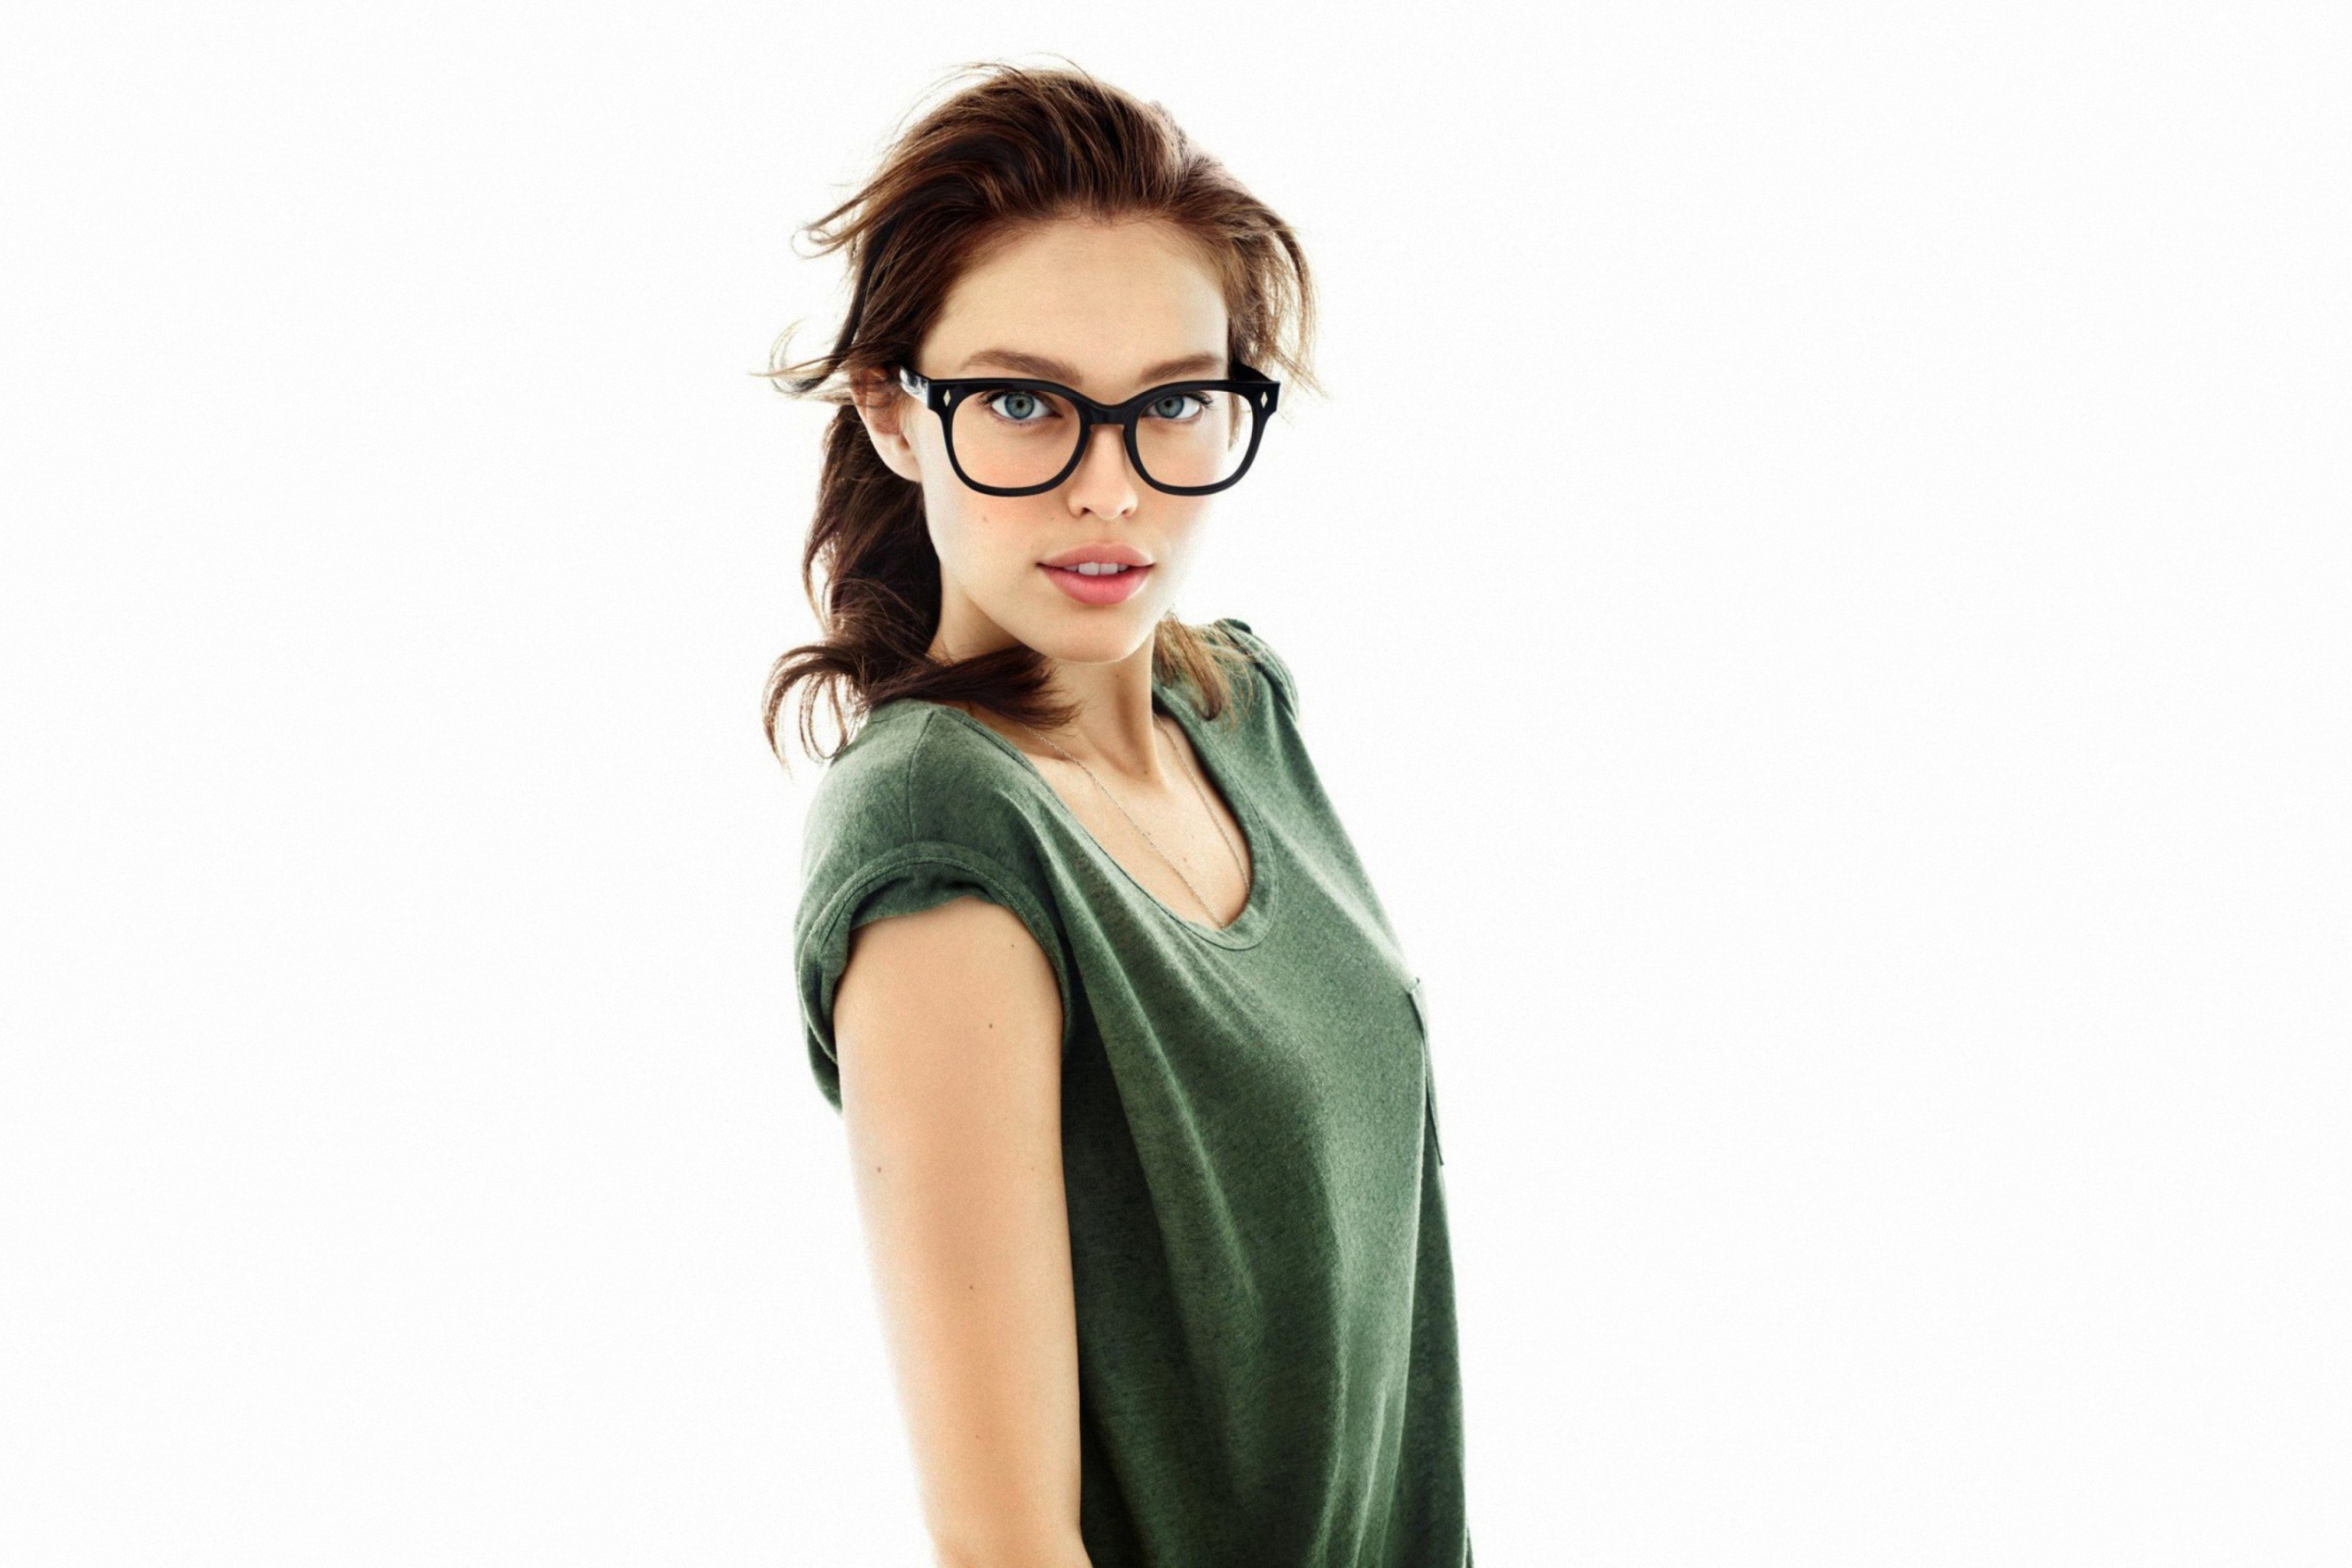 Very Cute Girl In Big Glasses wallpaper 2880x1920